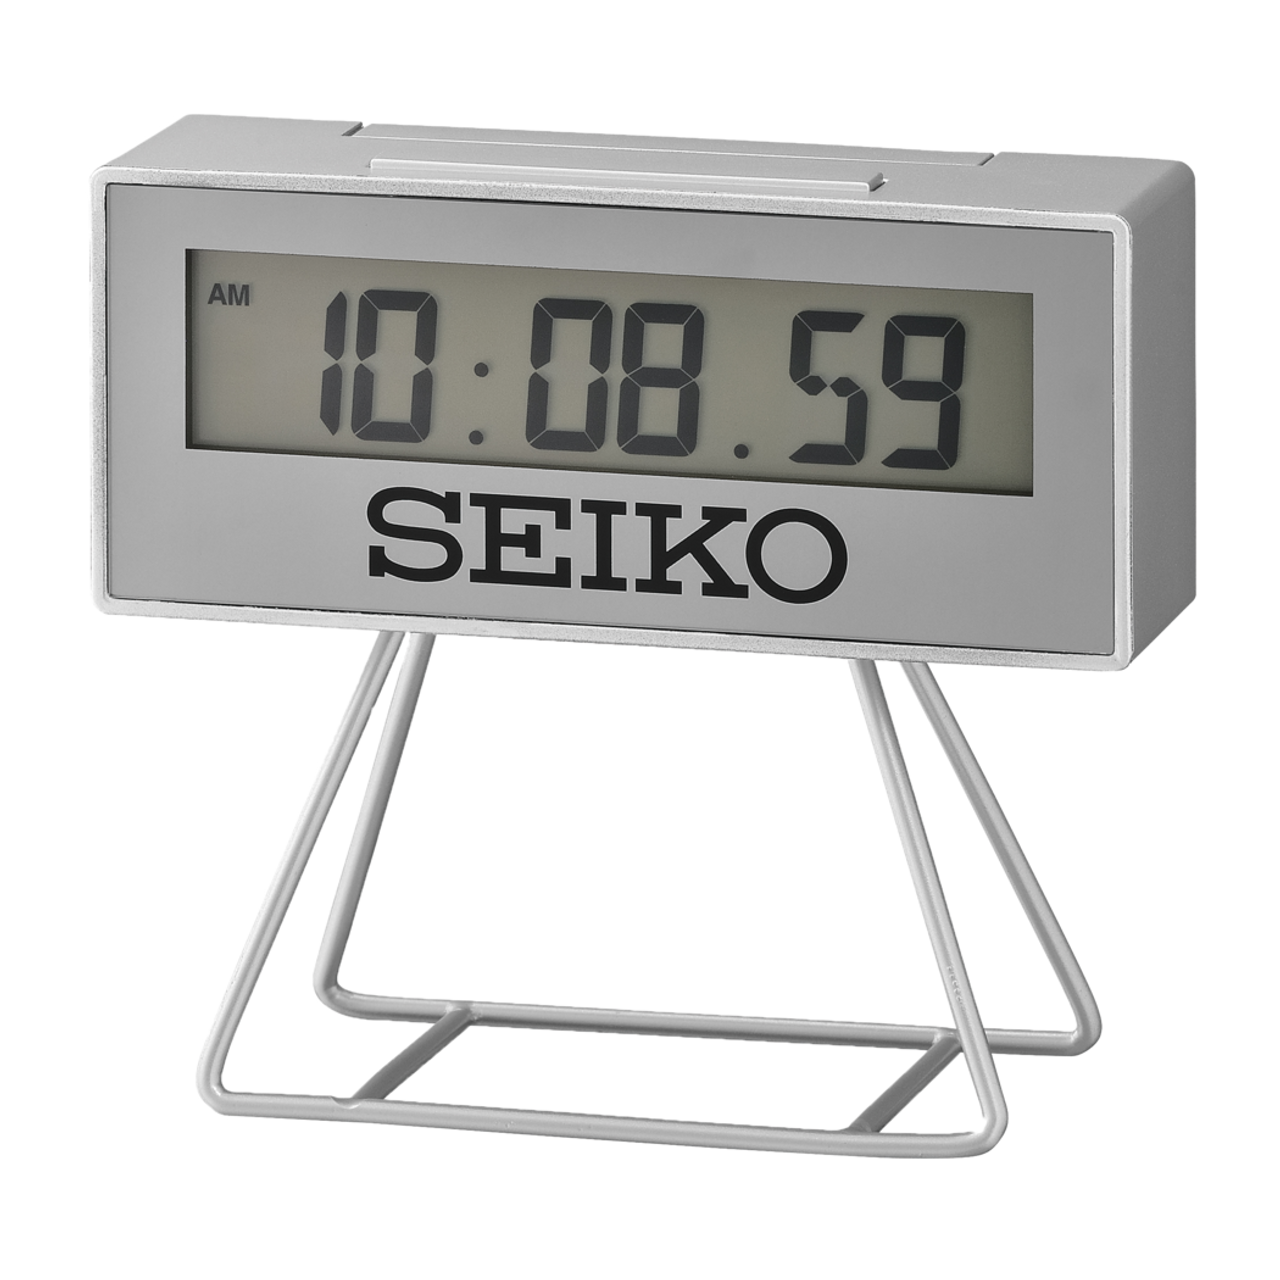 Supreme Seiko Marathon Clock シュプリーム セイコー - 置時計